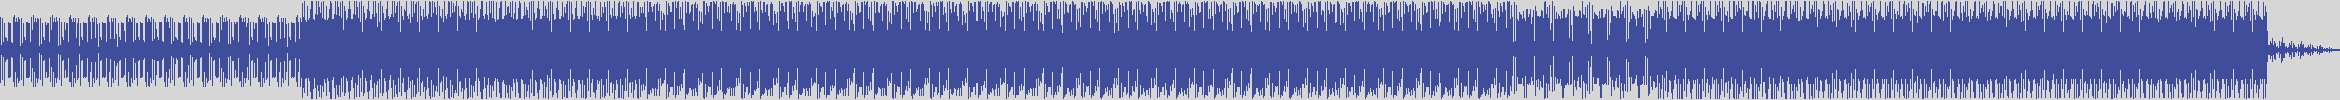 nf_boyz_records [NFY015] Rober Hazzard - Godfather [Extended Tribal Mix] audio wave form